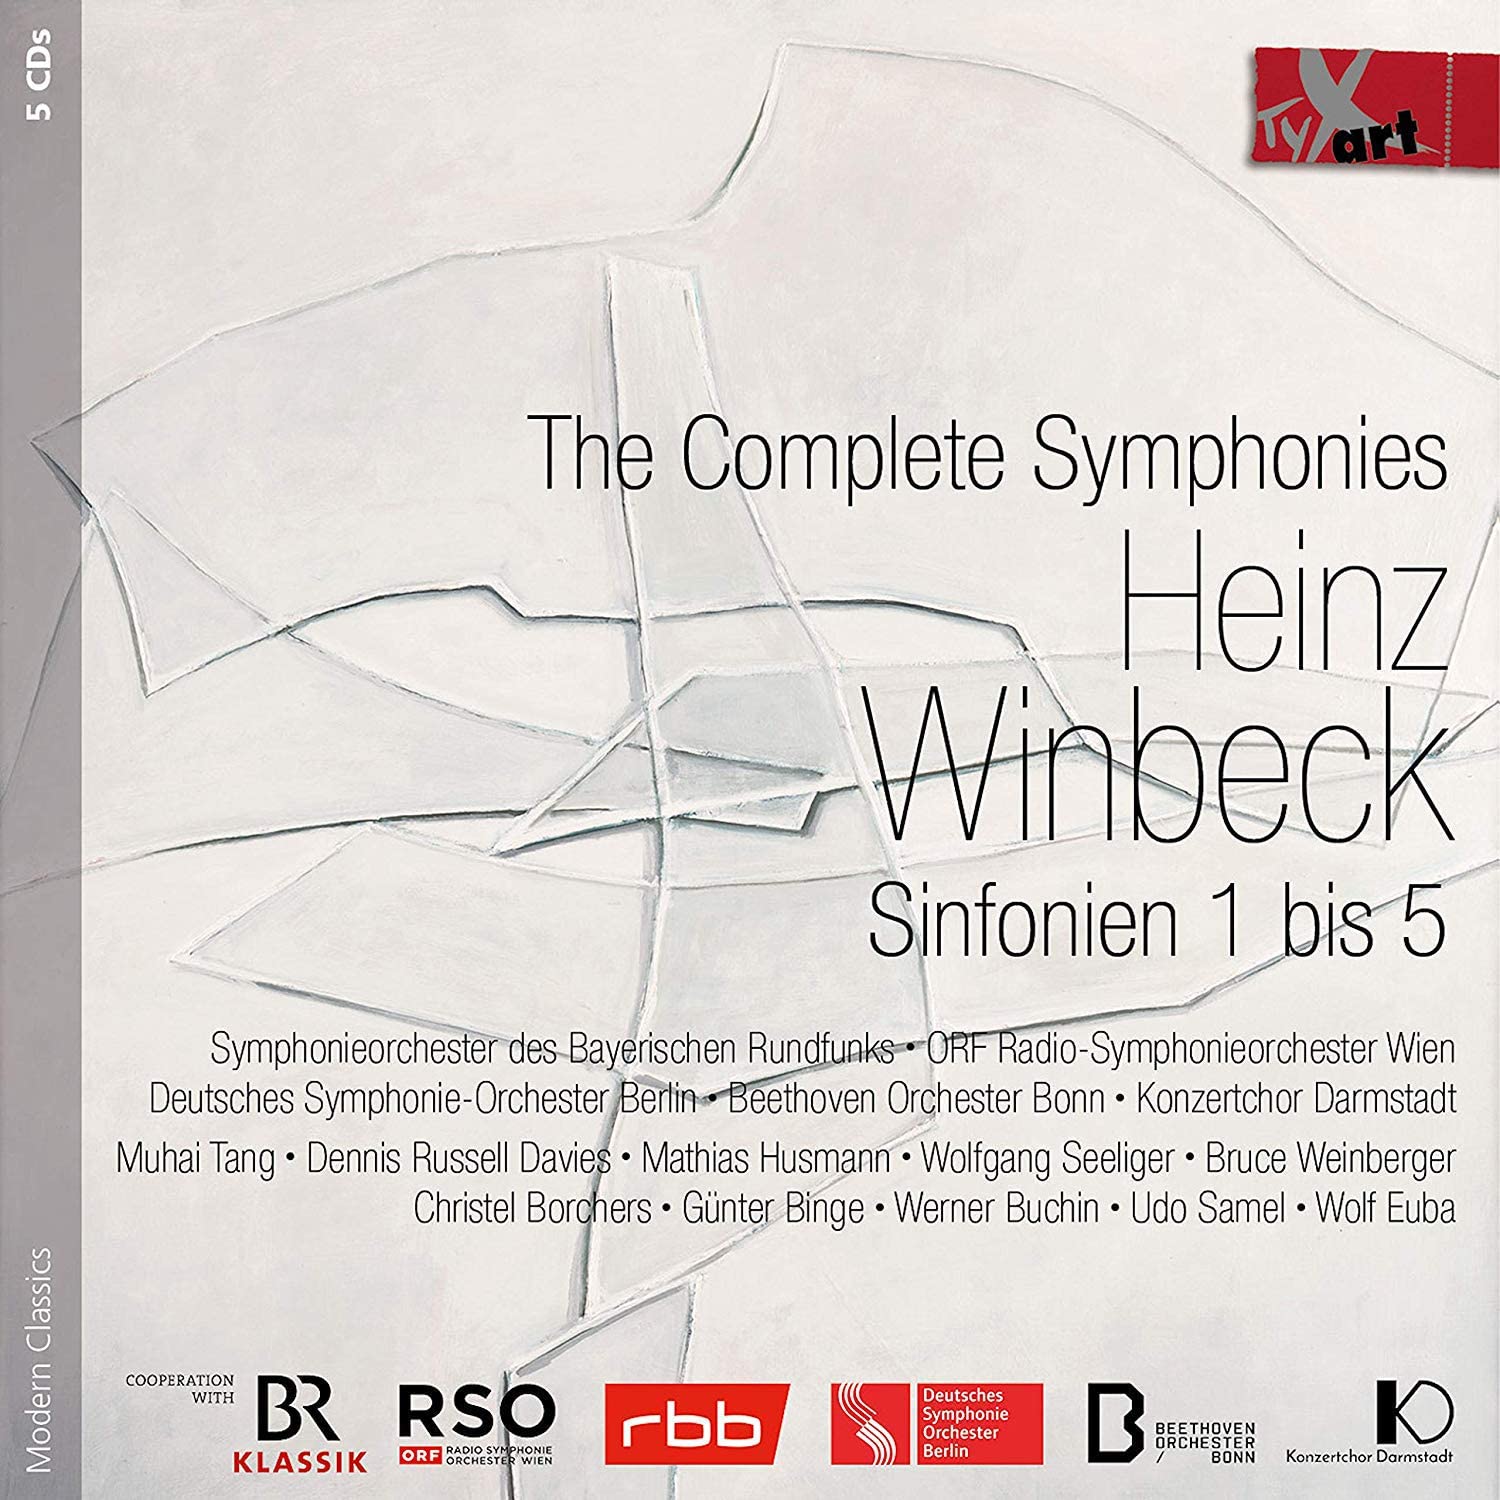 Winbeck Symphonies